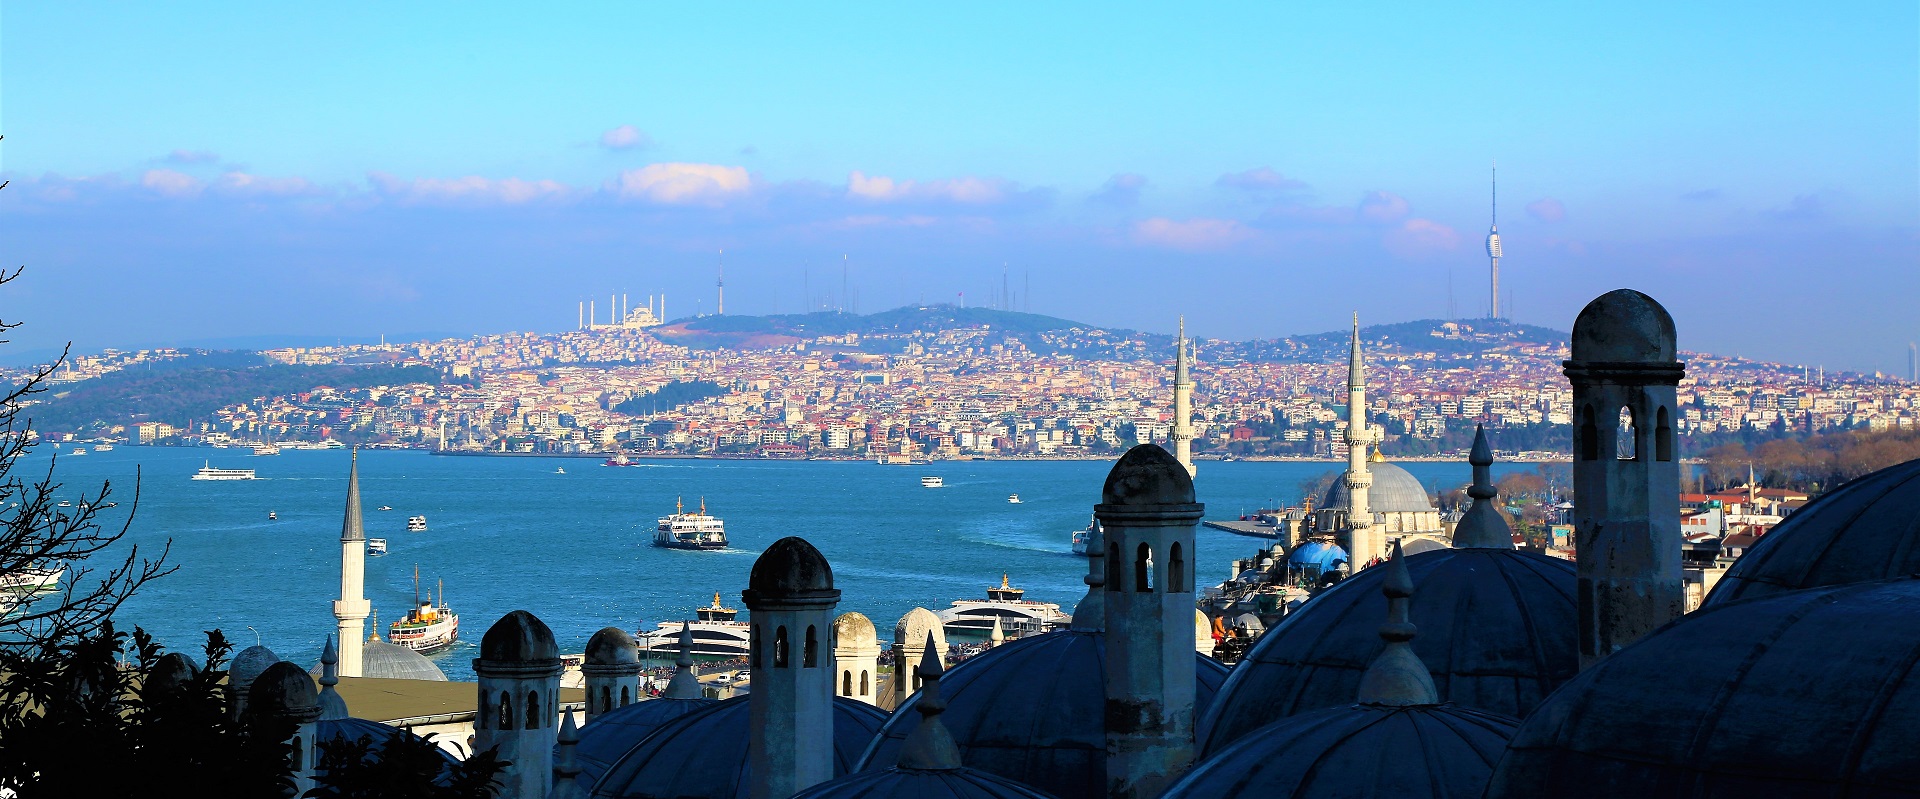 Стамбул - город на двух материках...